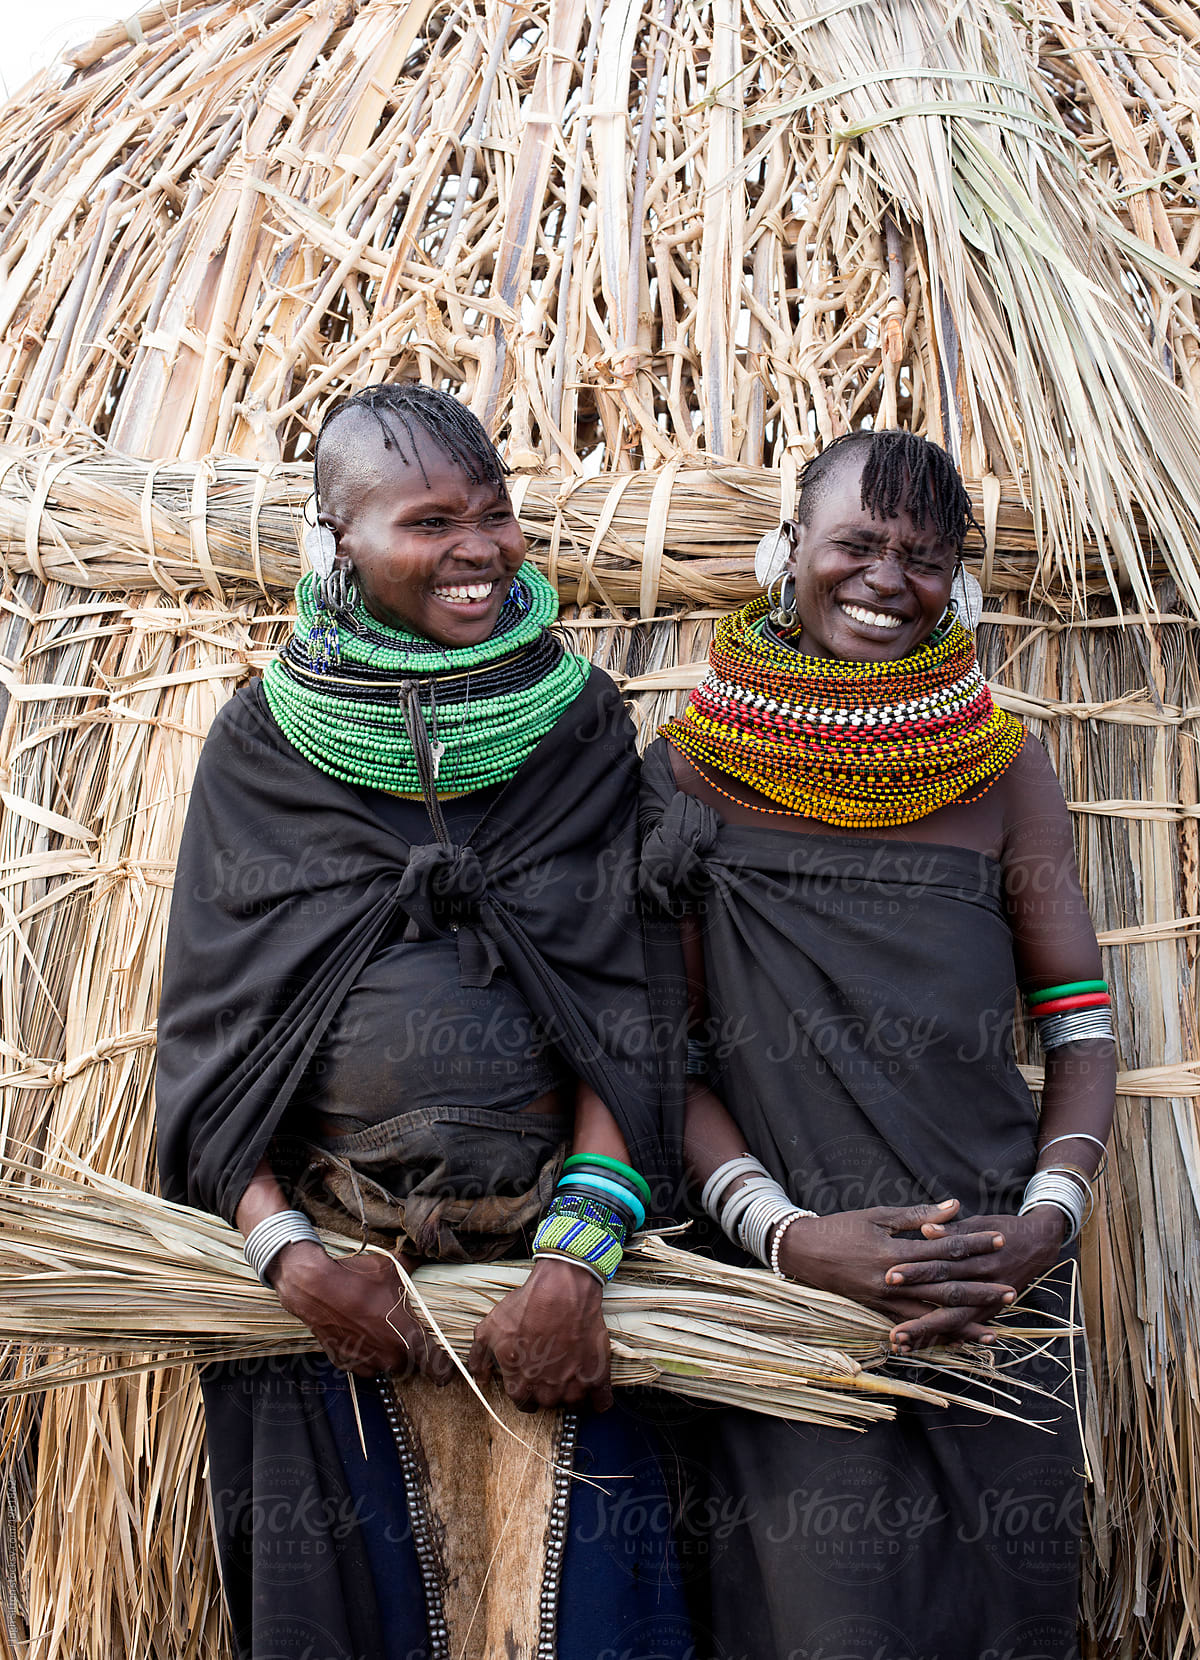 Women from Turkana tribe.